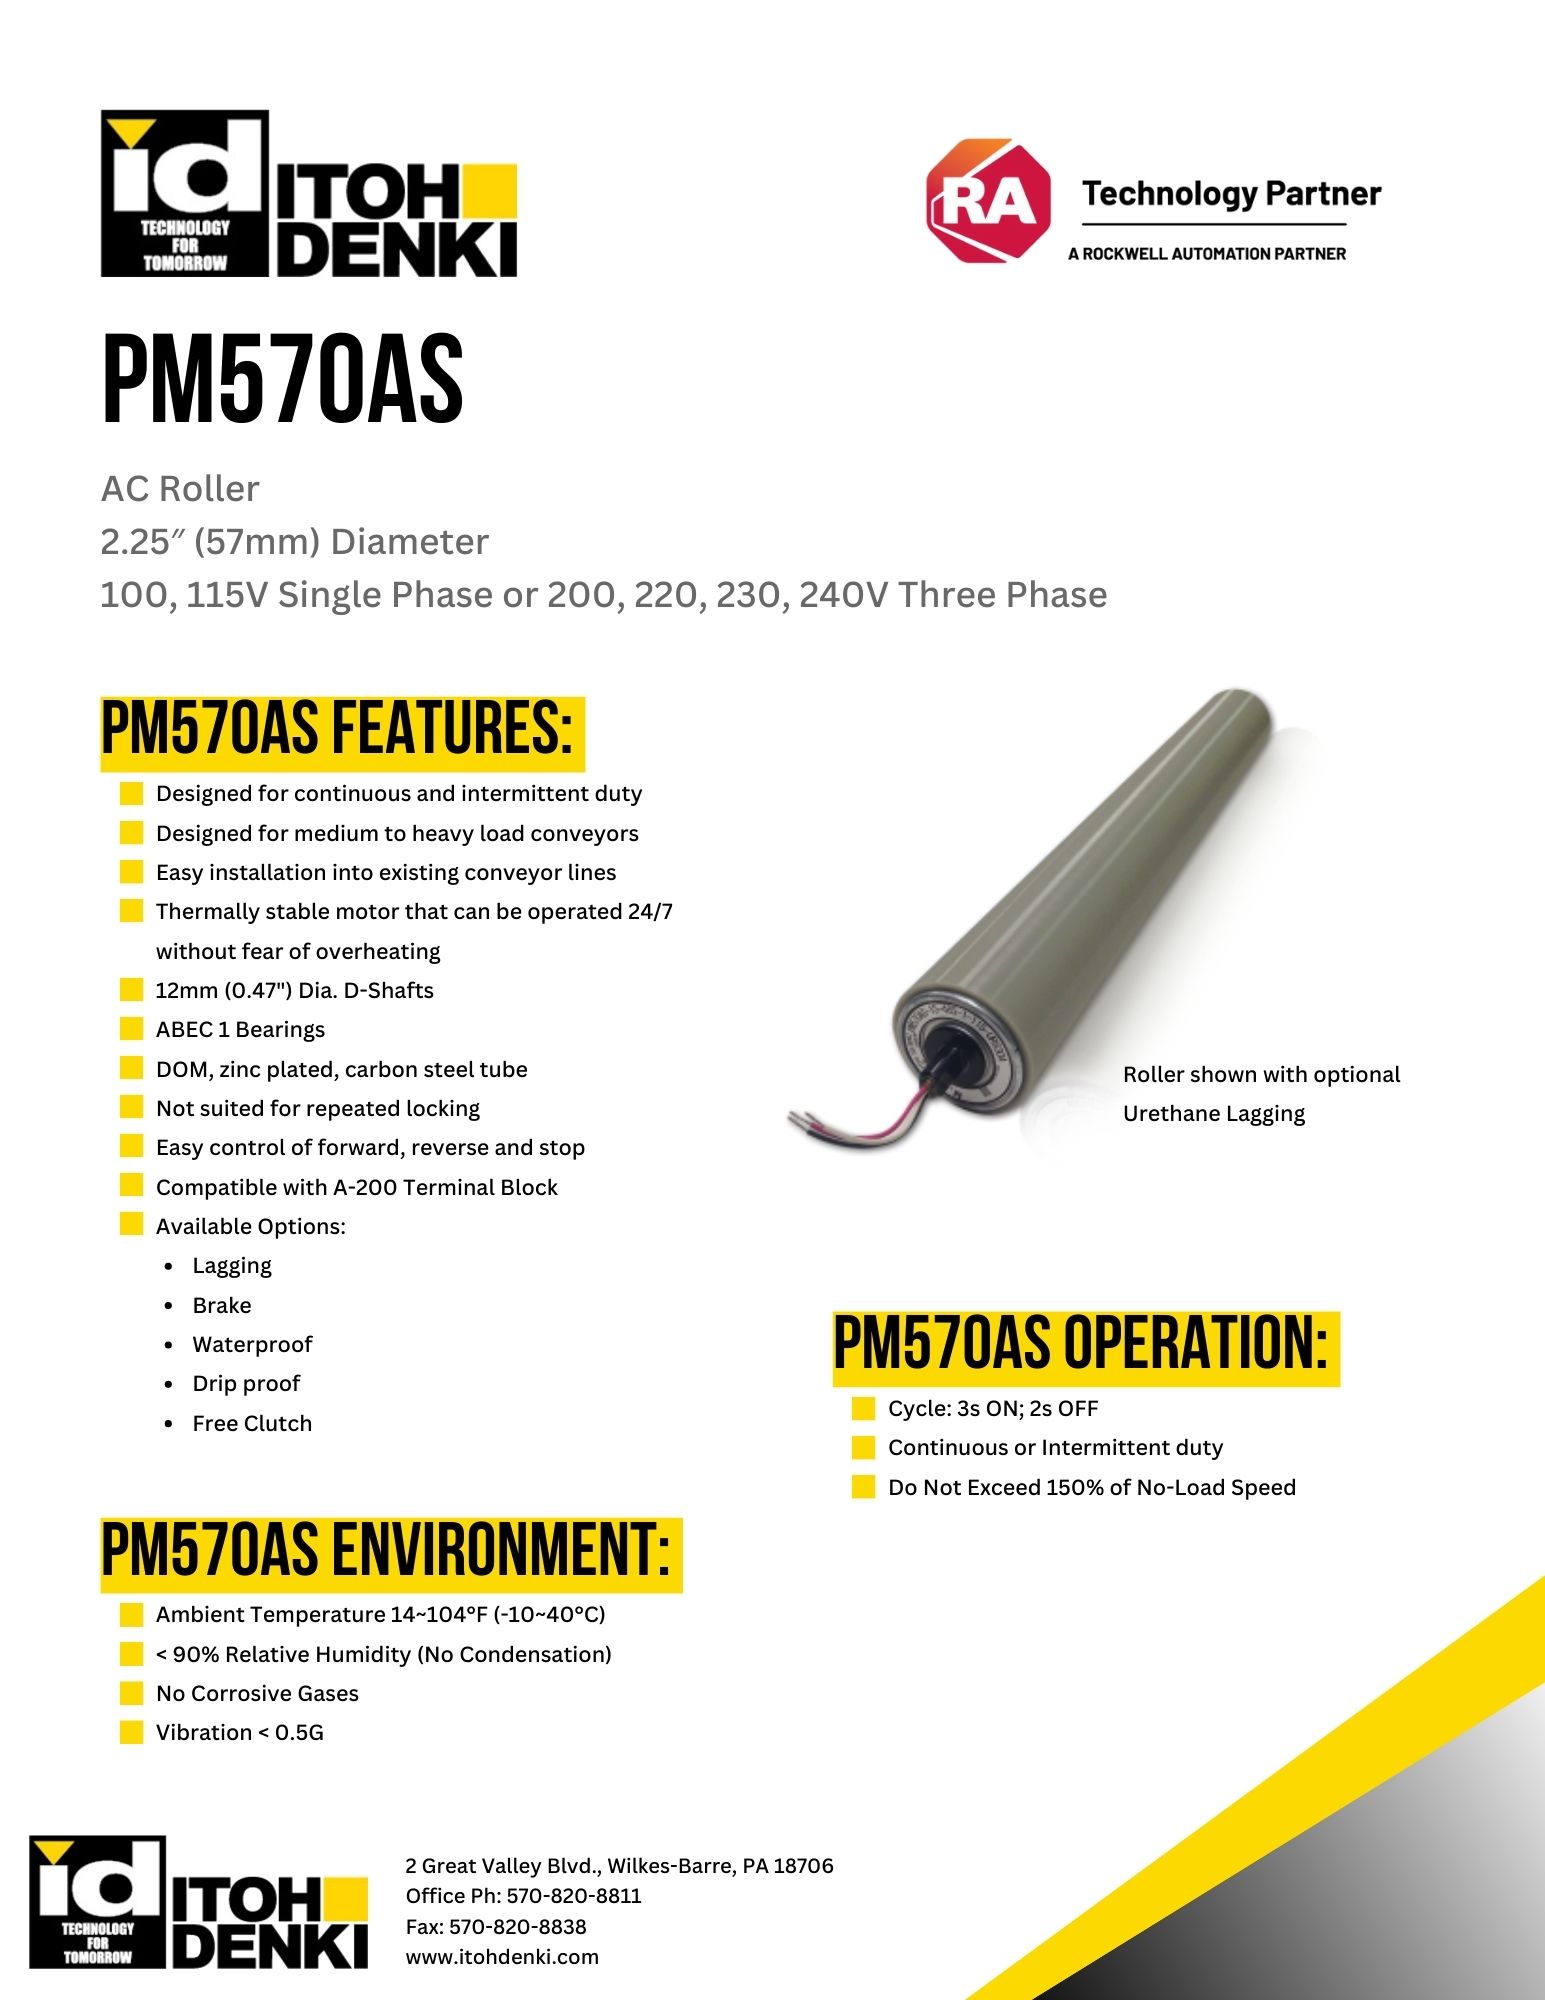 Itoh Denki PM570AS AC roller product sheet